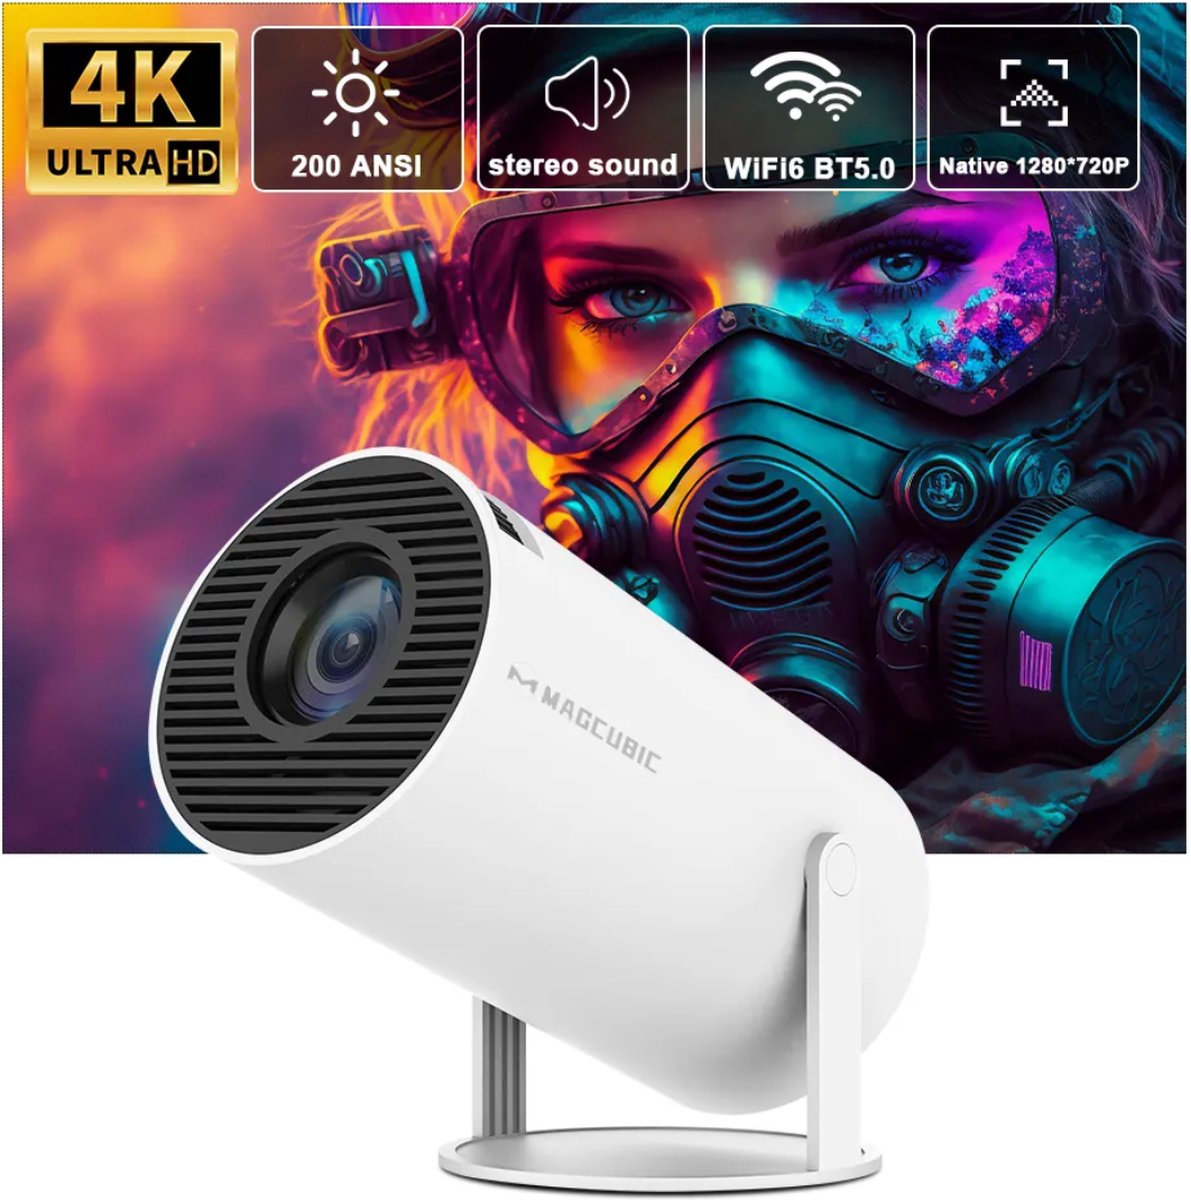 Ultieme Draagbare WiFi 6 Mini Beamer 4K/200 ANSI Projector Streamen - HY300 - BT 5.0 - Android - Home Cinema